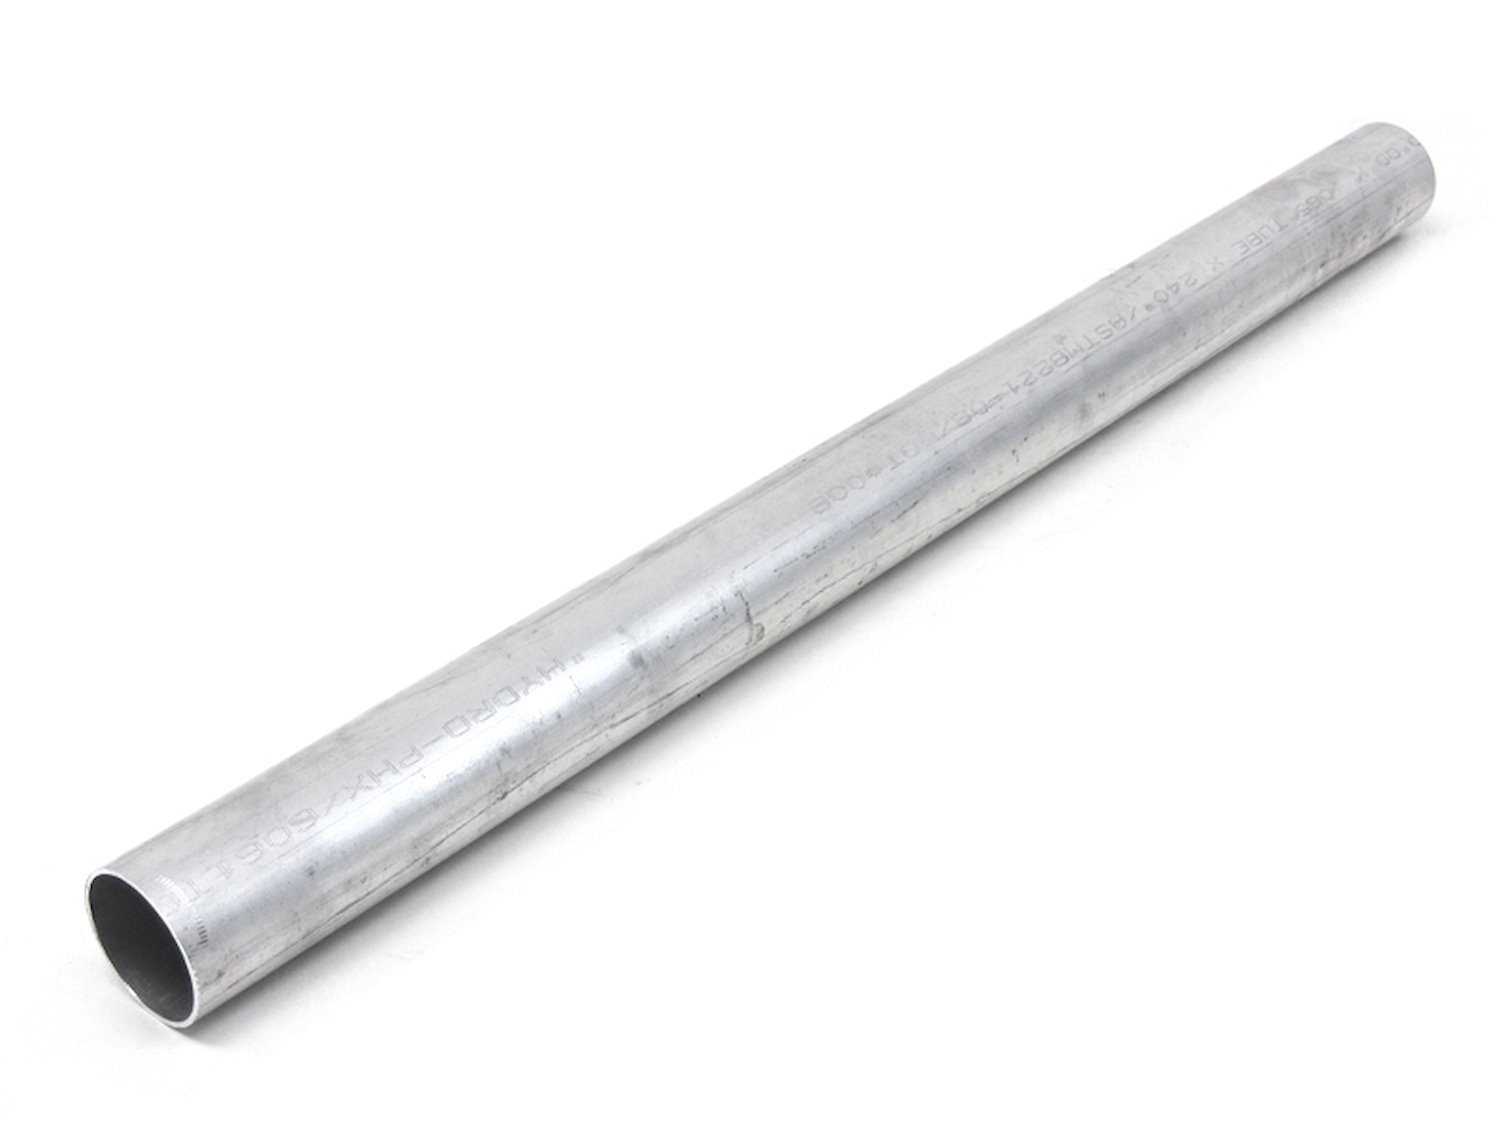 AST-3F-038 Aluminum Tubing, 6061 Aluminum, Straight Tubing, 3/8 in. OD, Seamless, Raw Finish, 3 ft. Long